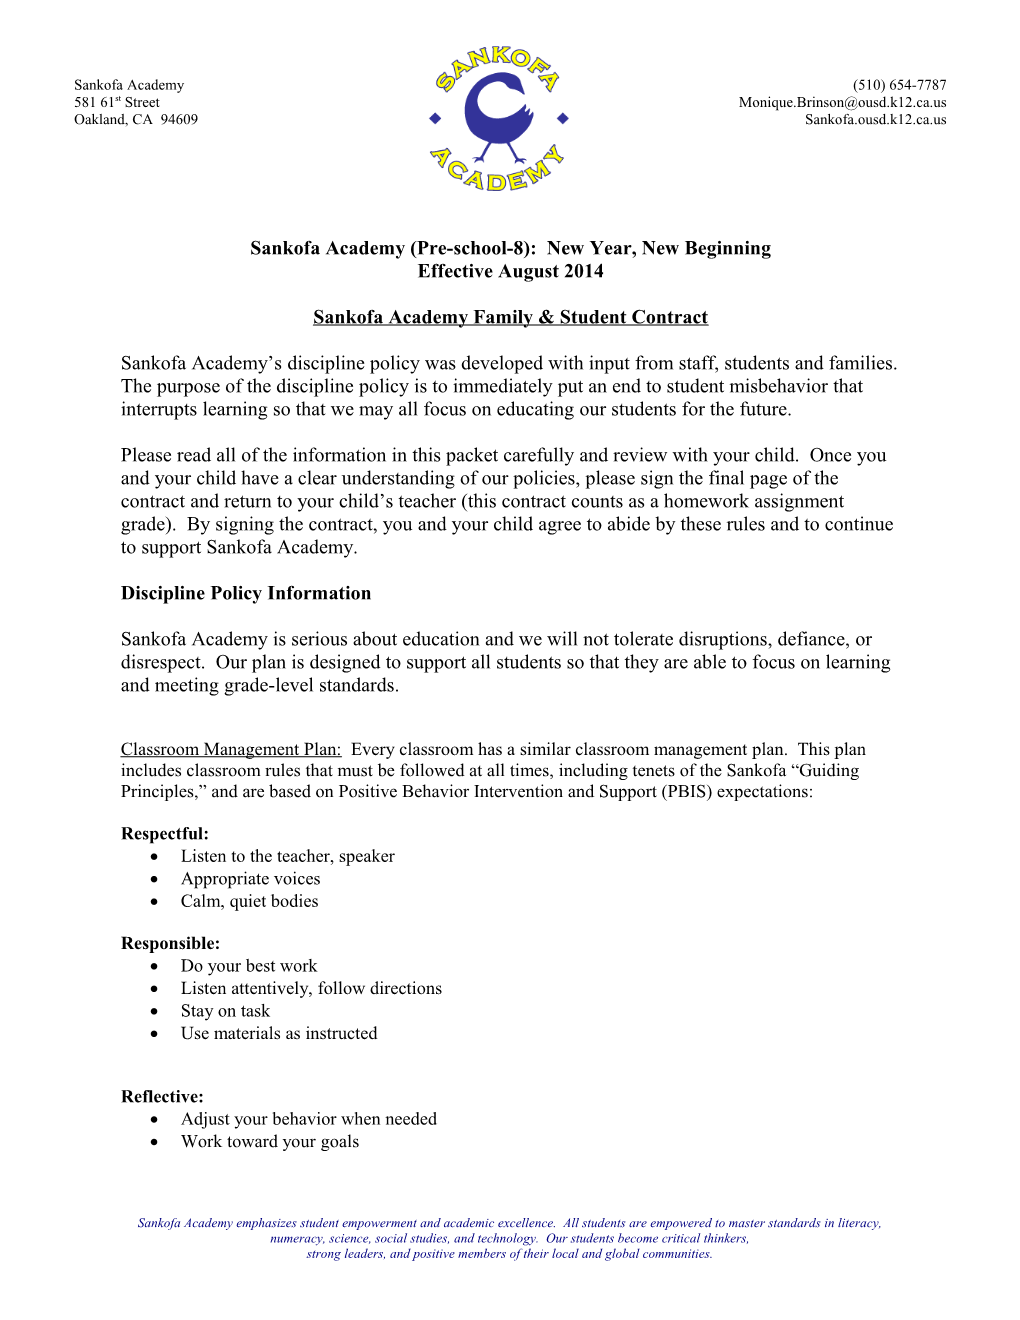 Sankofa Academy (Pre-School-8): New Year, New Beginning